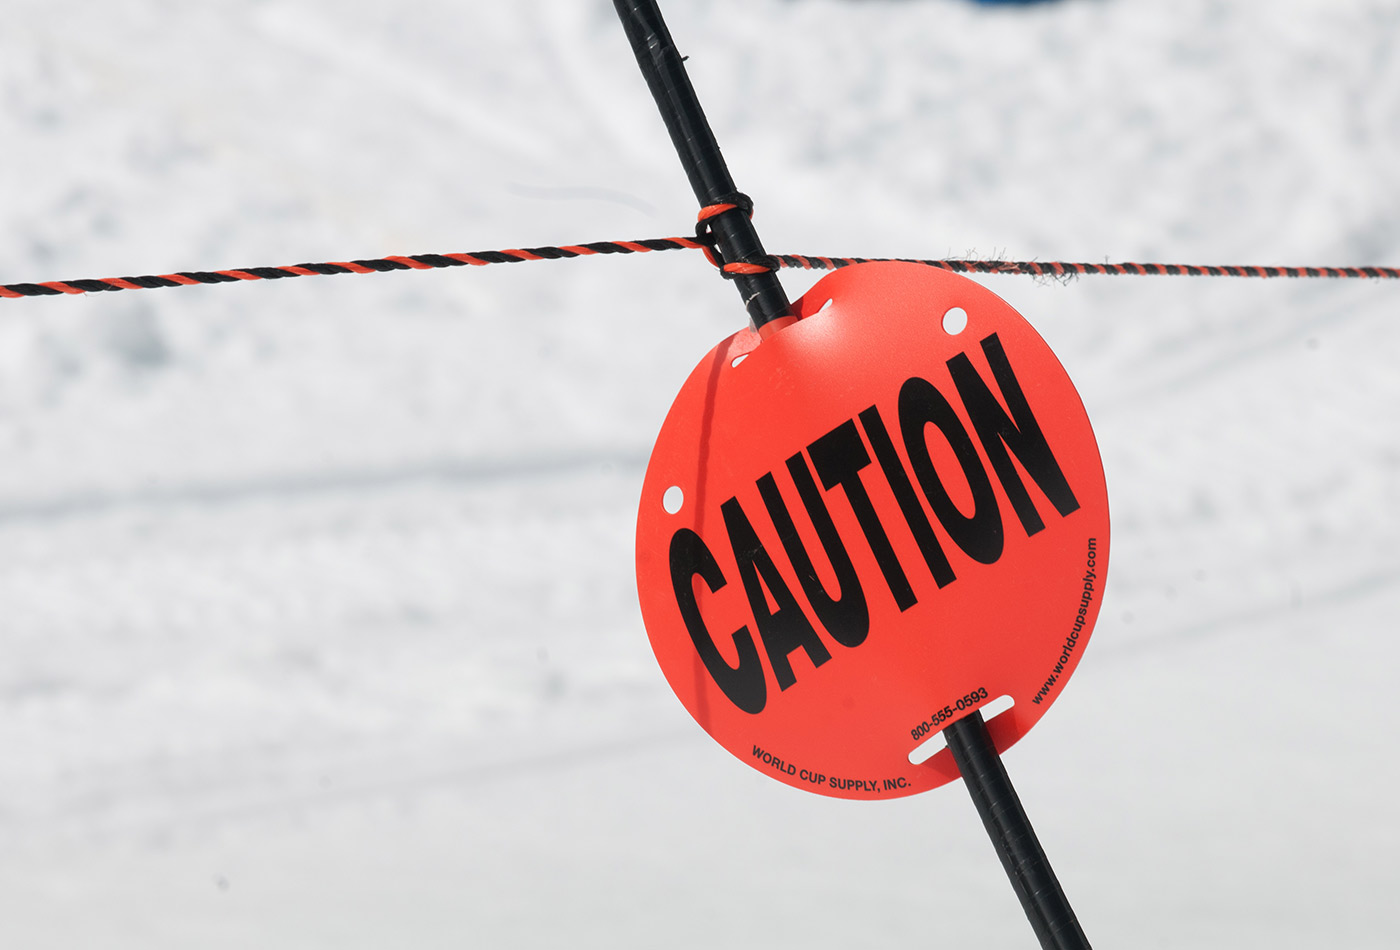 Caution sign on ski slope